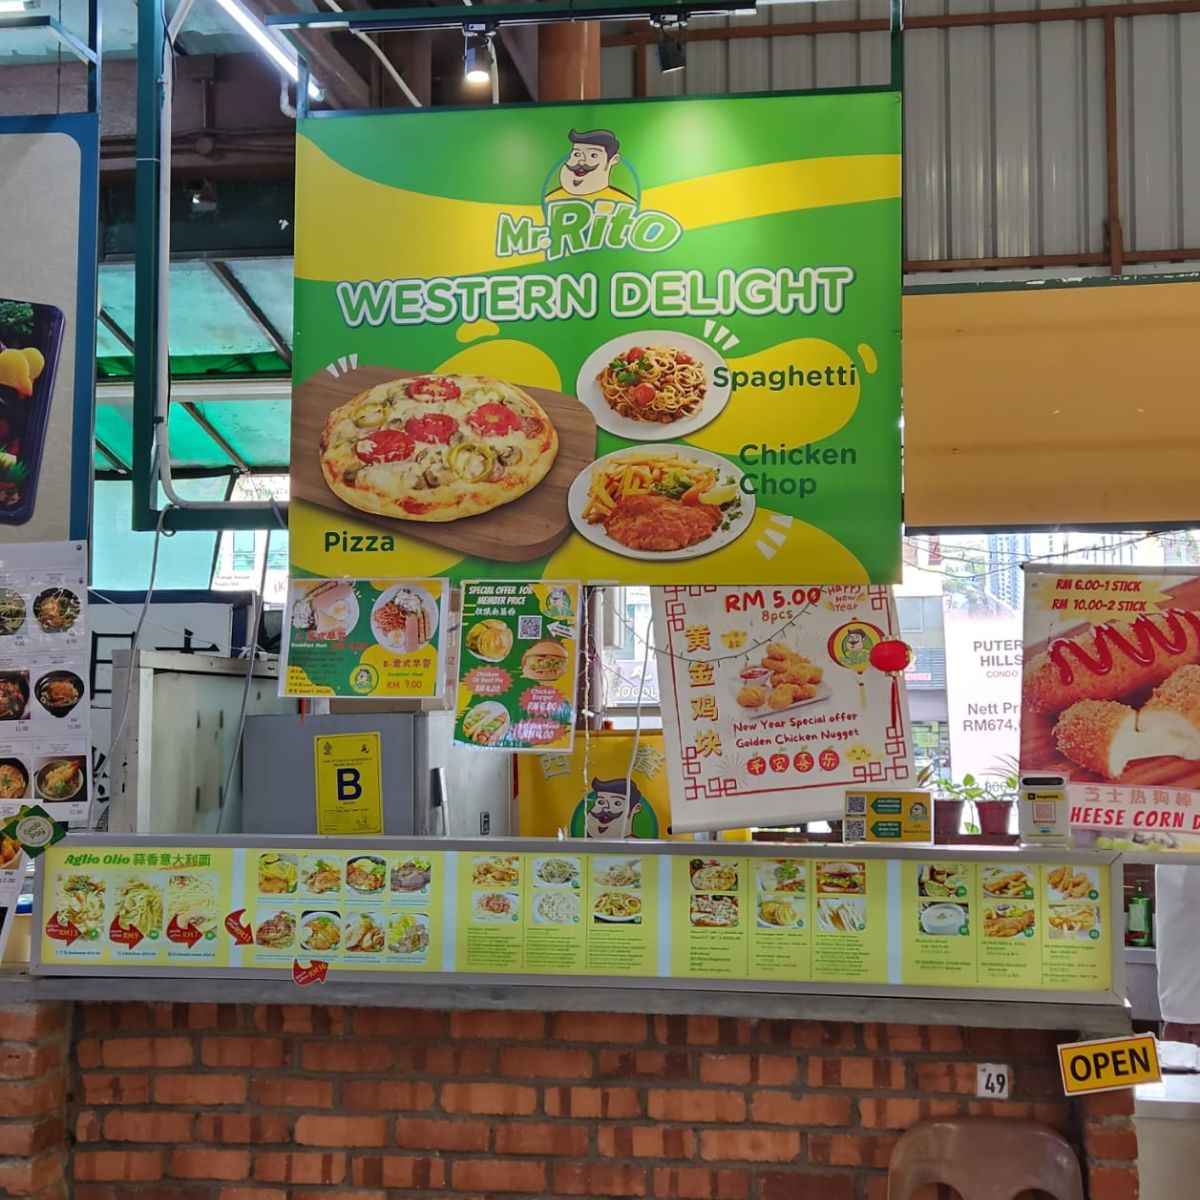 928 Food Court, Puteri Mart, Puchong